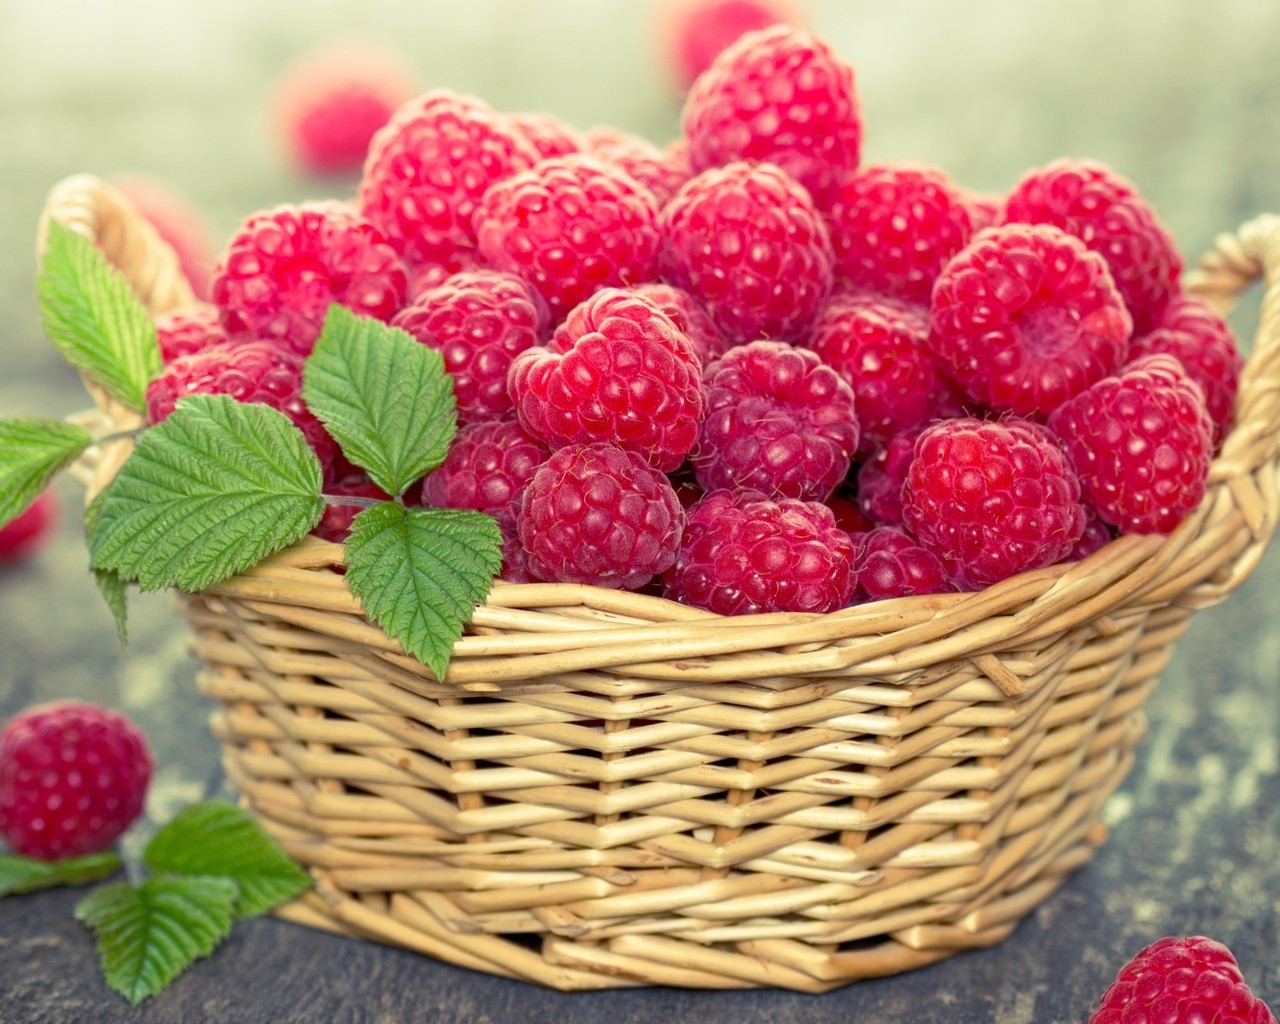 Basket of Raspberries for 1280 x 1024 resolution